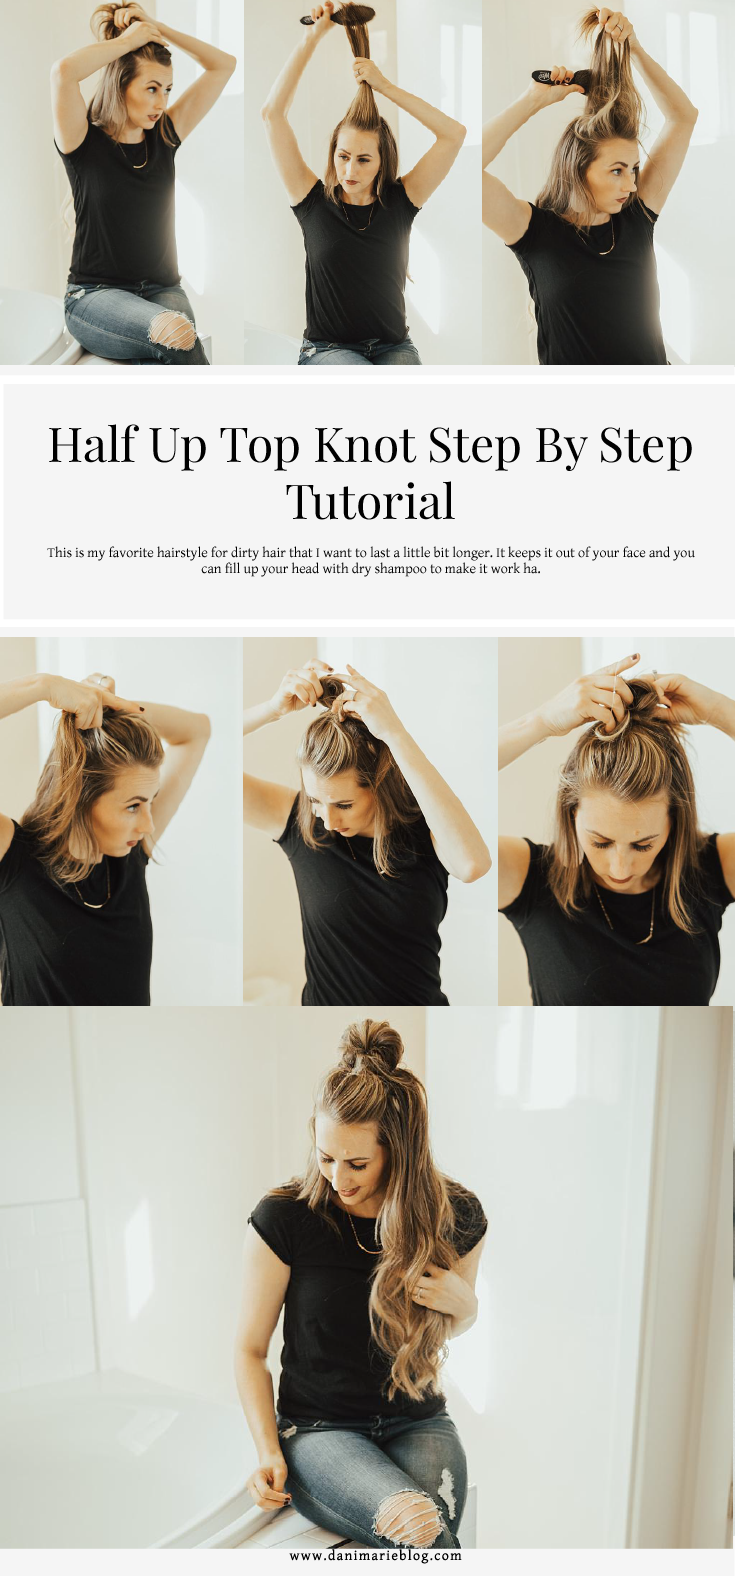 Half Top Knot Hair Tutorial by popular Utah style blogger Dani Marie